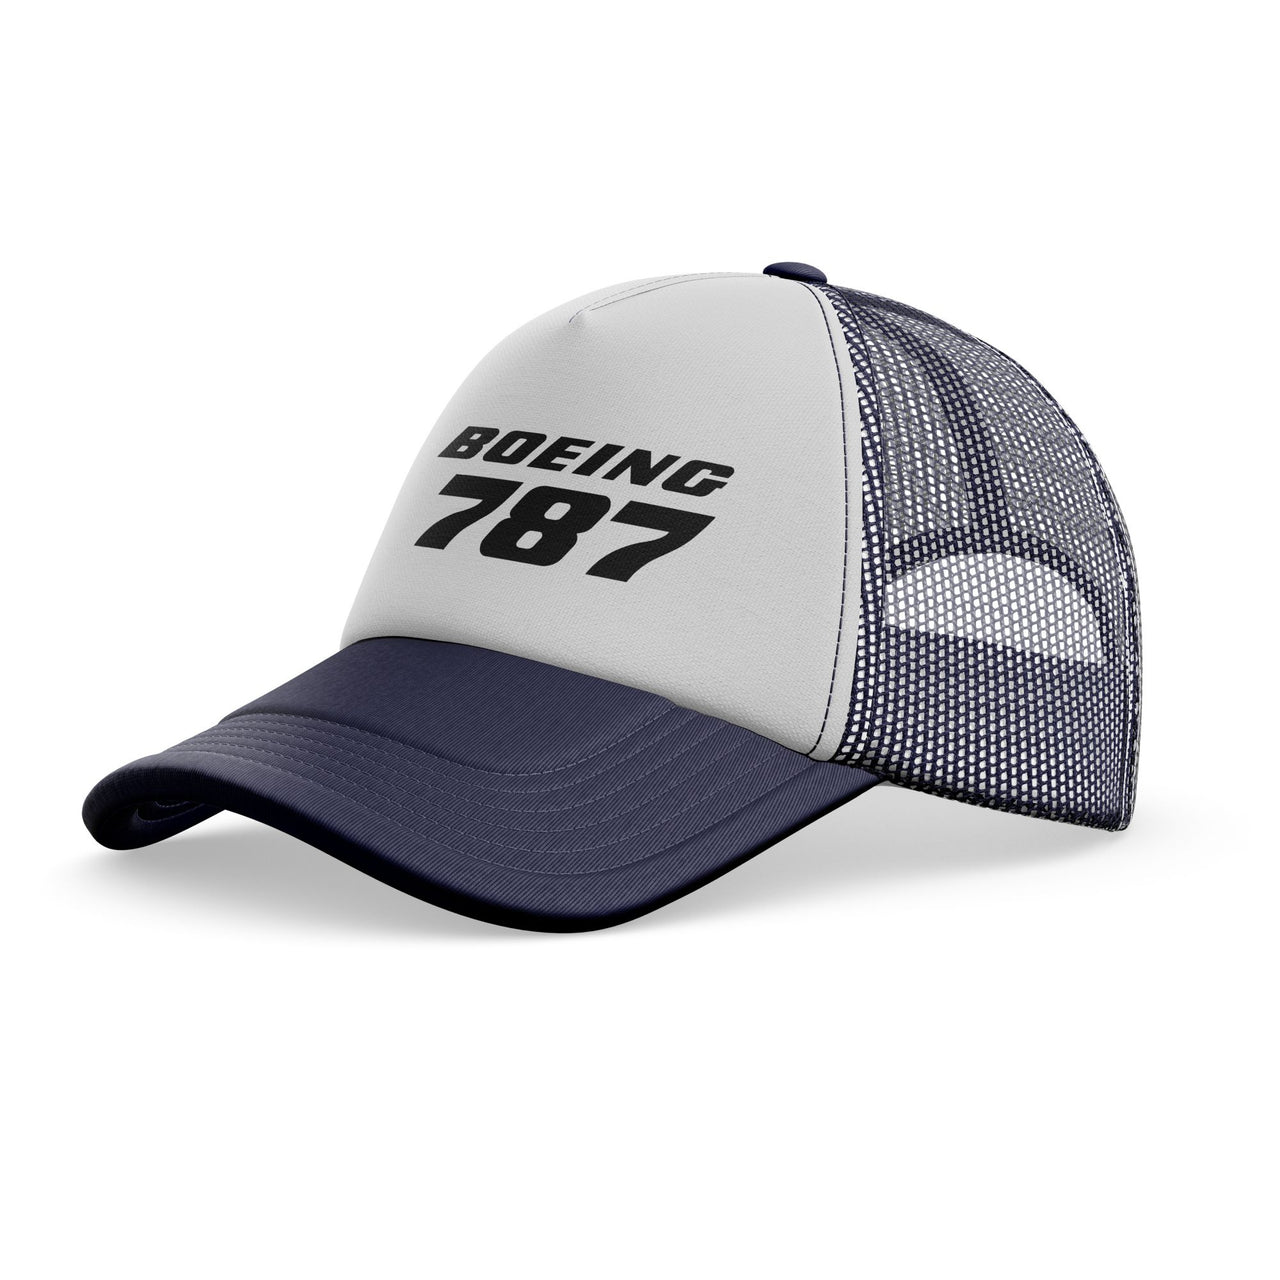 Boeing 787 & Text Designed Trucker Caps & Hats